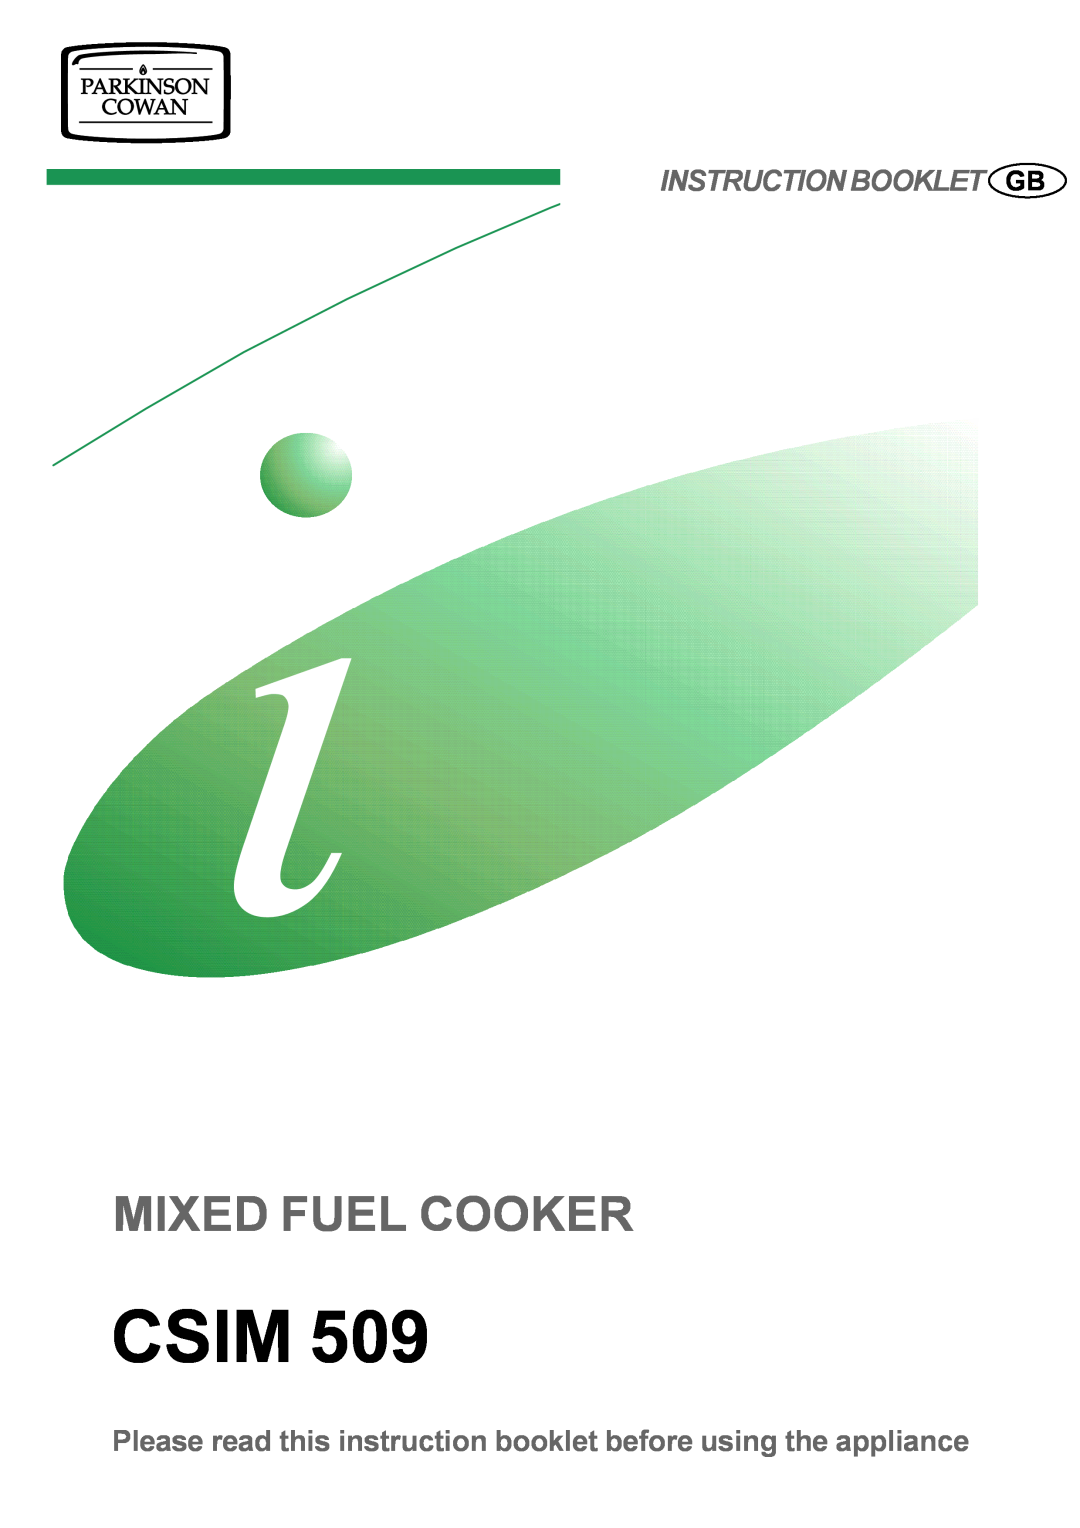 Parkinson Cowan CSIM 509 manual Csim, Mixed Fuel Cooker, Instruction Booklet Gb 